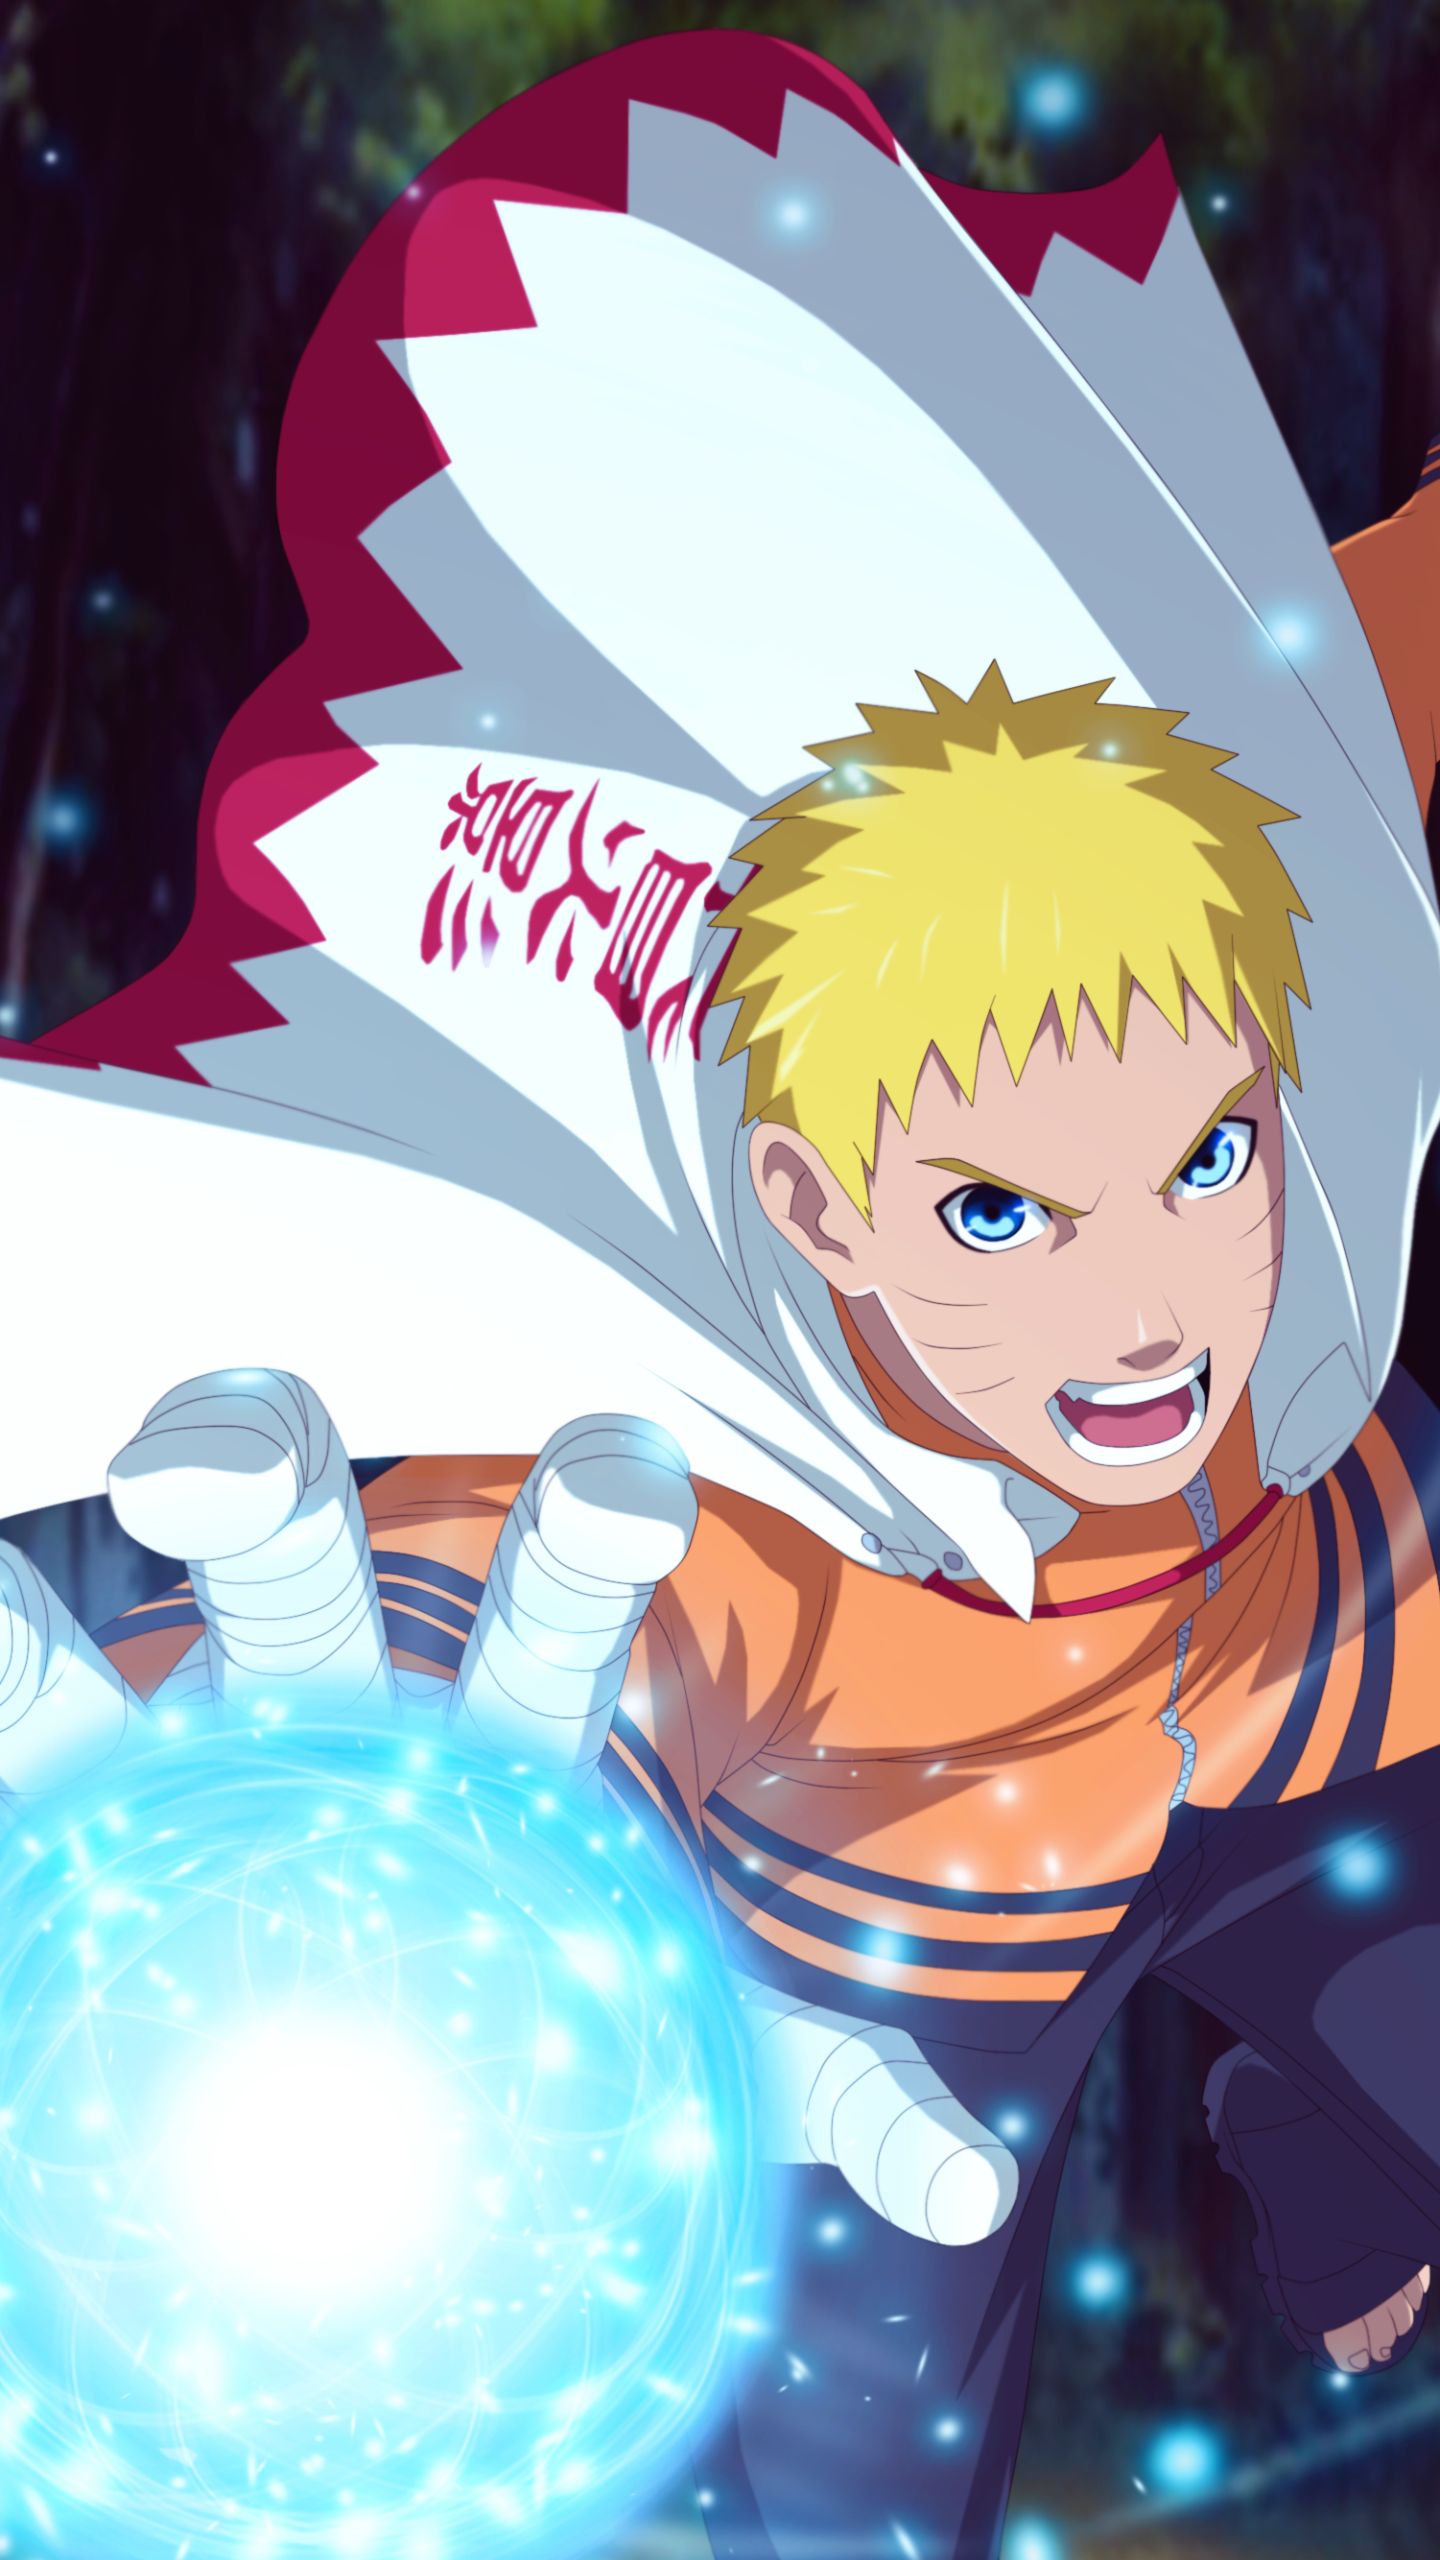 Baixe gratuitamente a imagem Anime, Naruto, Naruto Uzumaki, Hokage (Naruto), Boruto na área de trabalho do seu PC